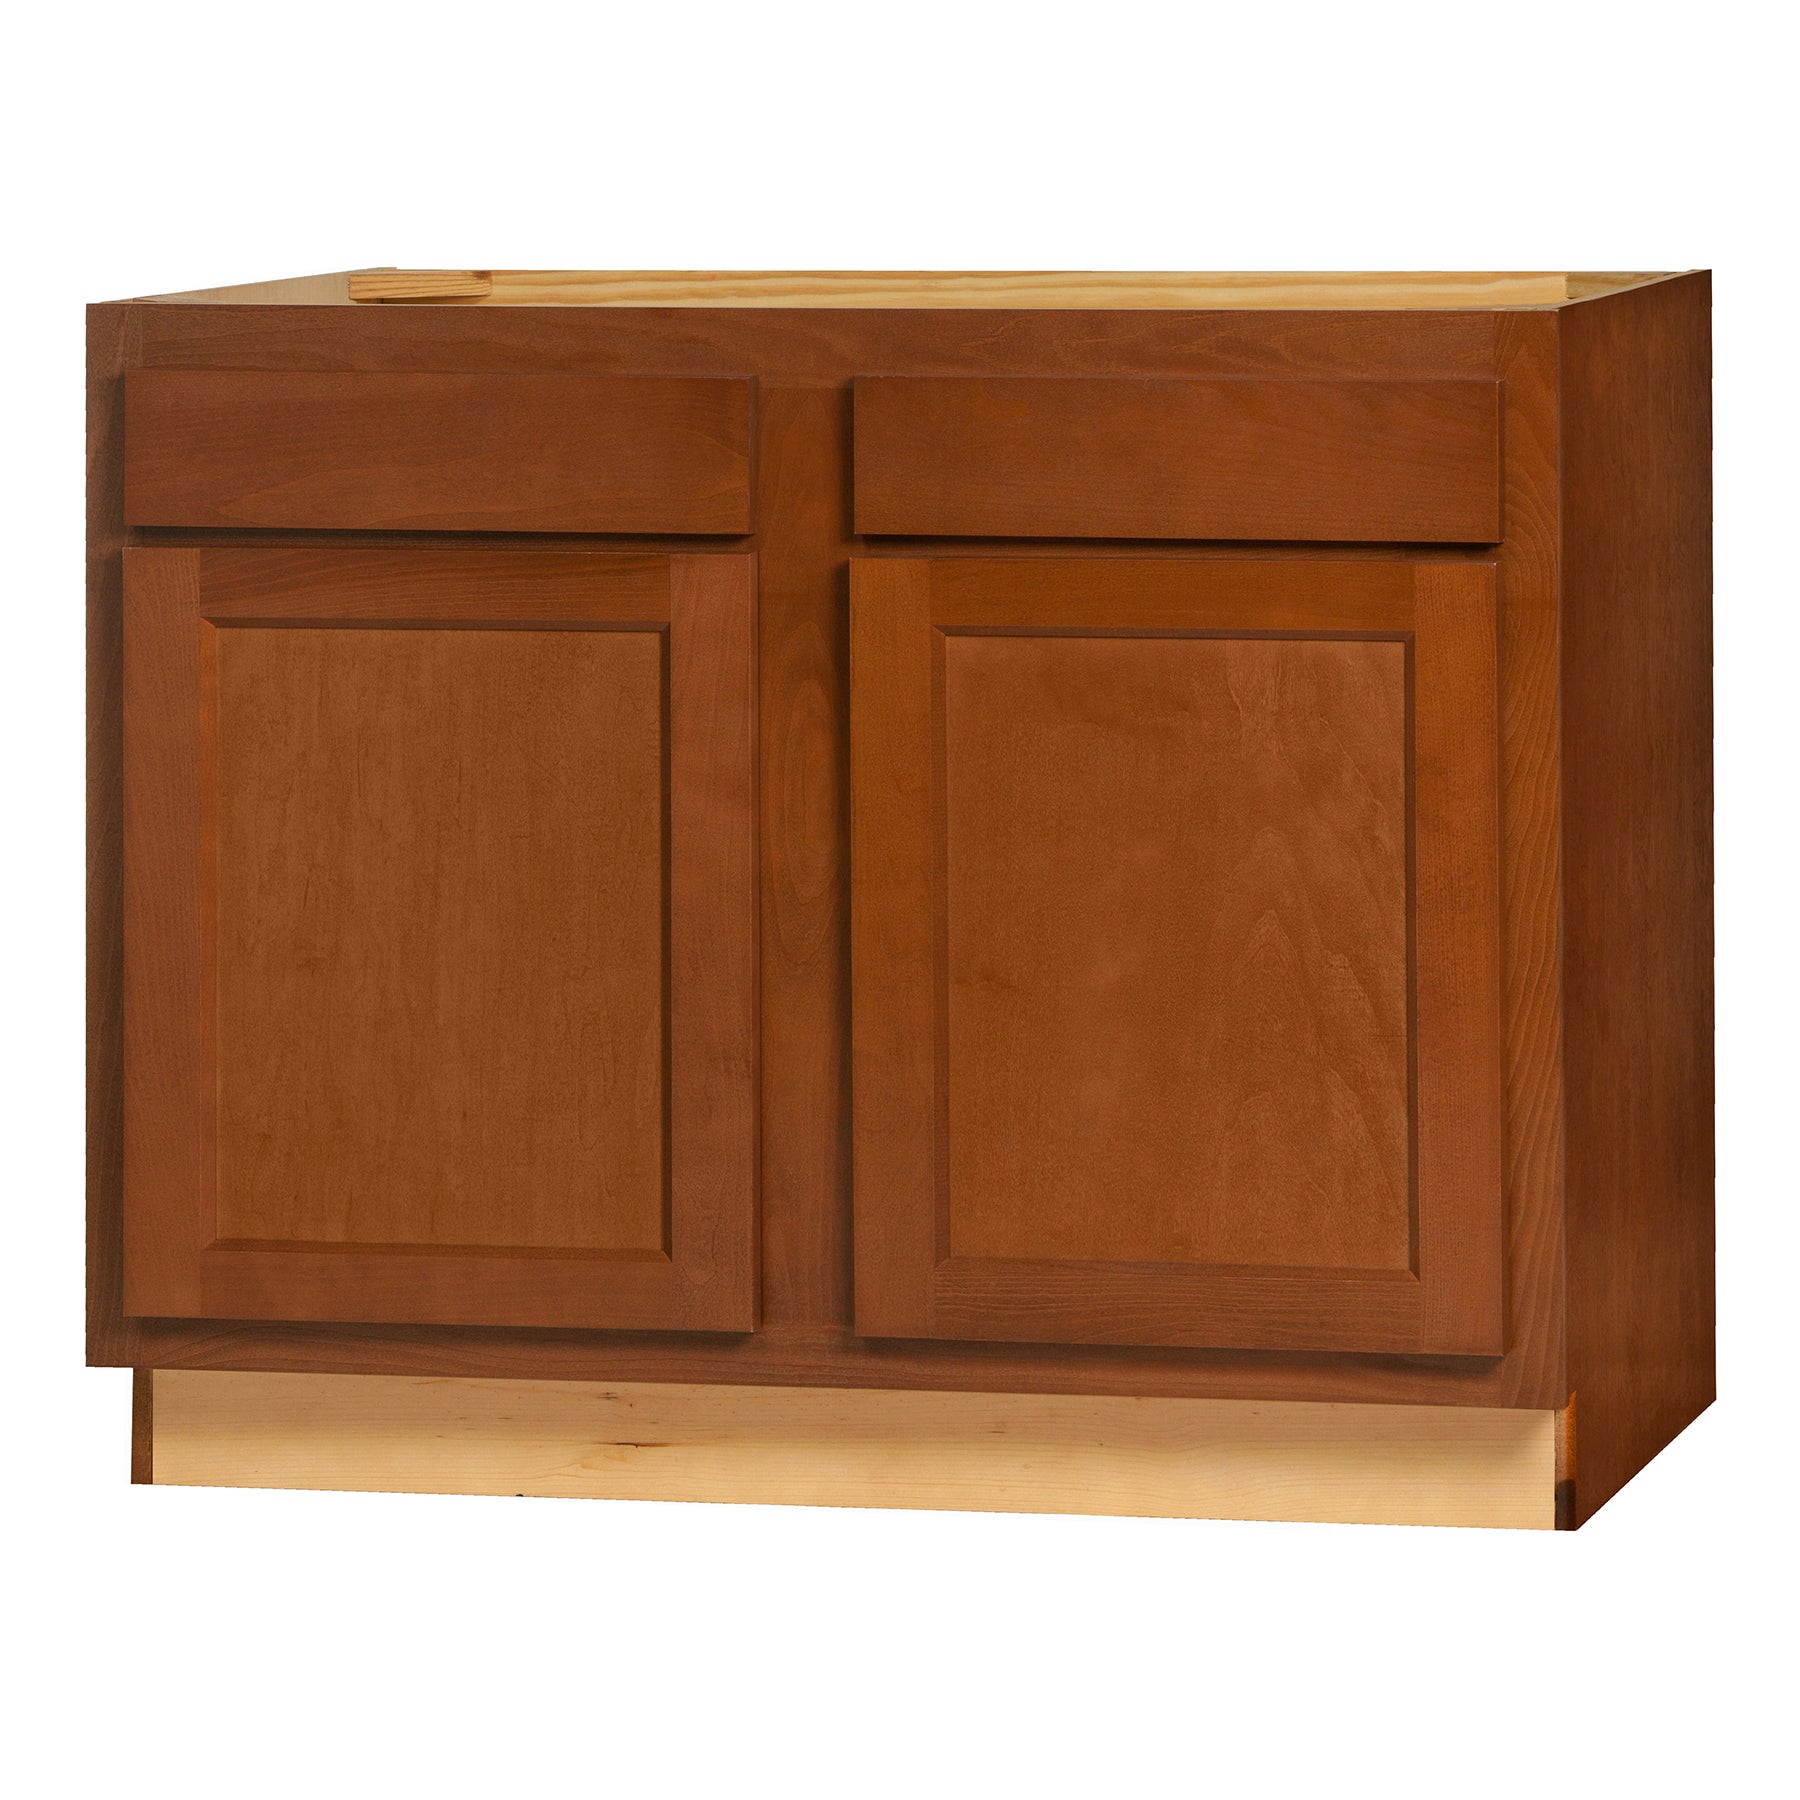 42 Inch Base Cabinets - Glenwood Shaker - 42 Inch W x 24 Inch D x 34.5 Inch H